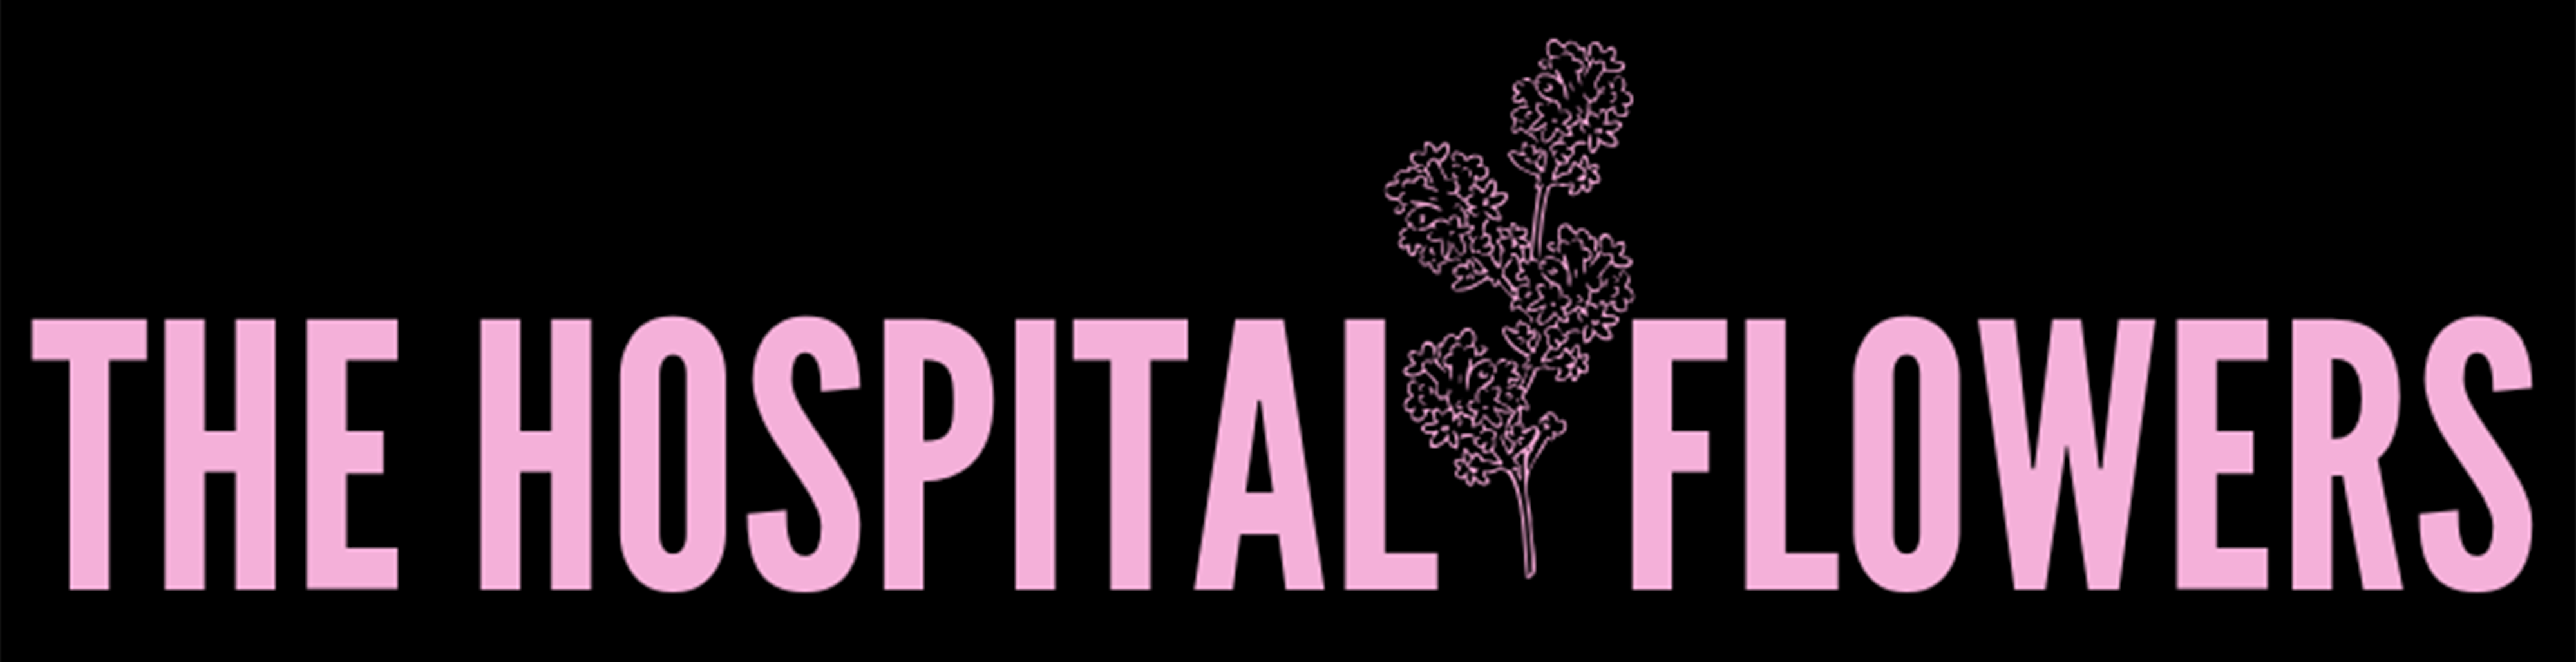 the hospital flowers - logo